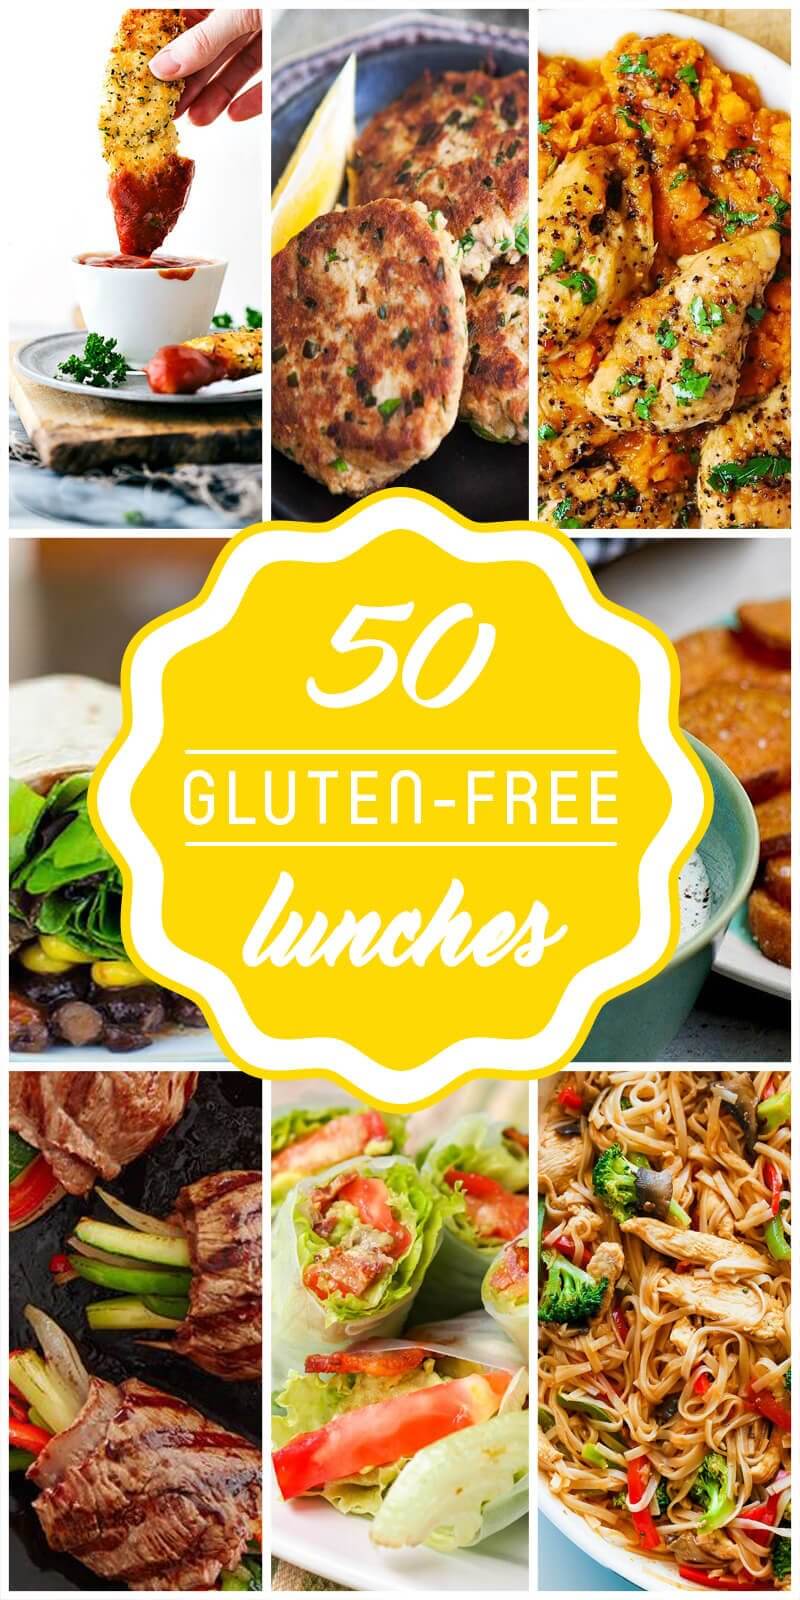 Best Gluten-Free Lunch Recipes